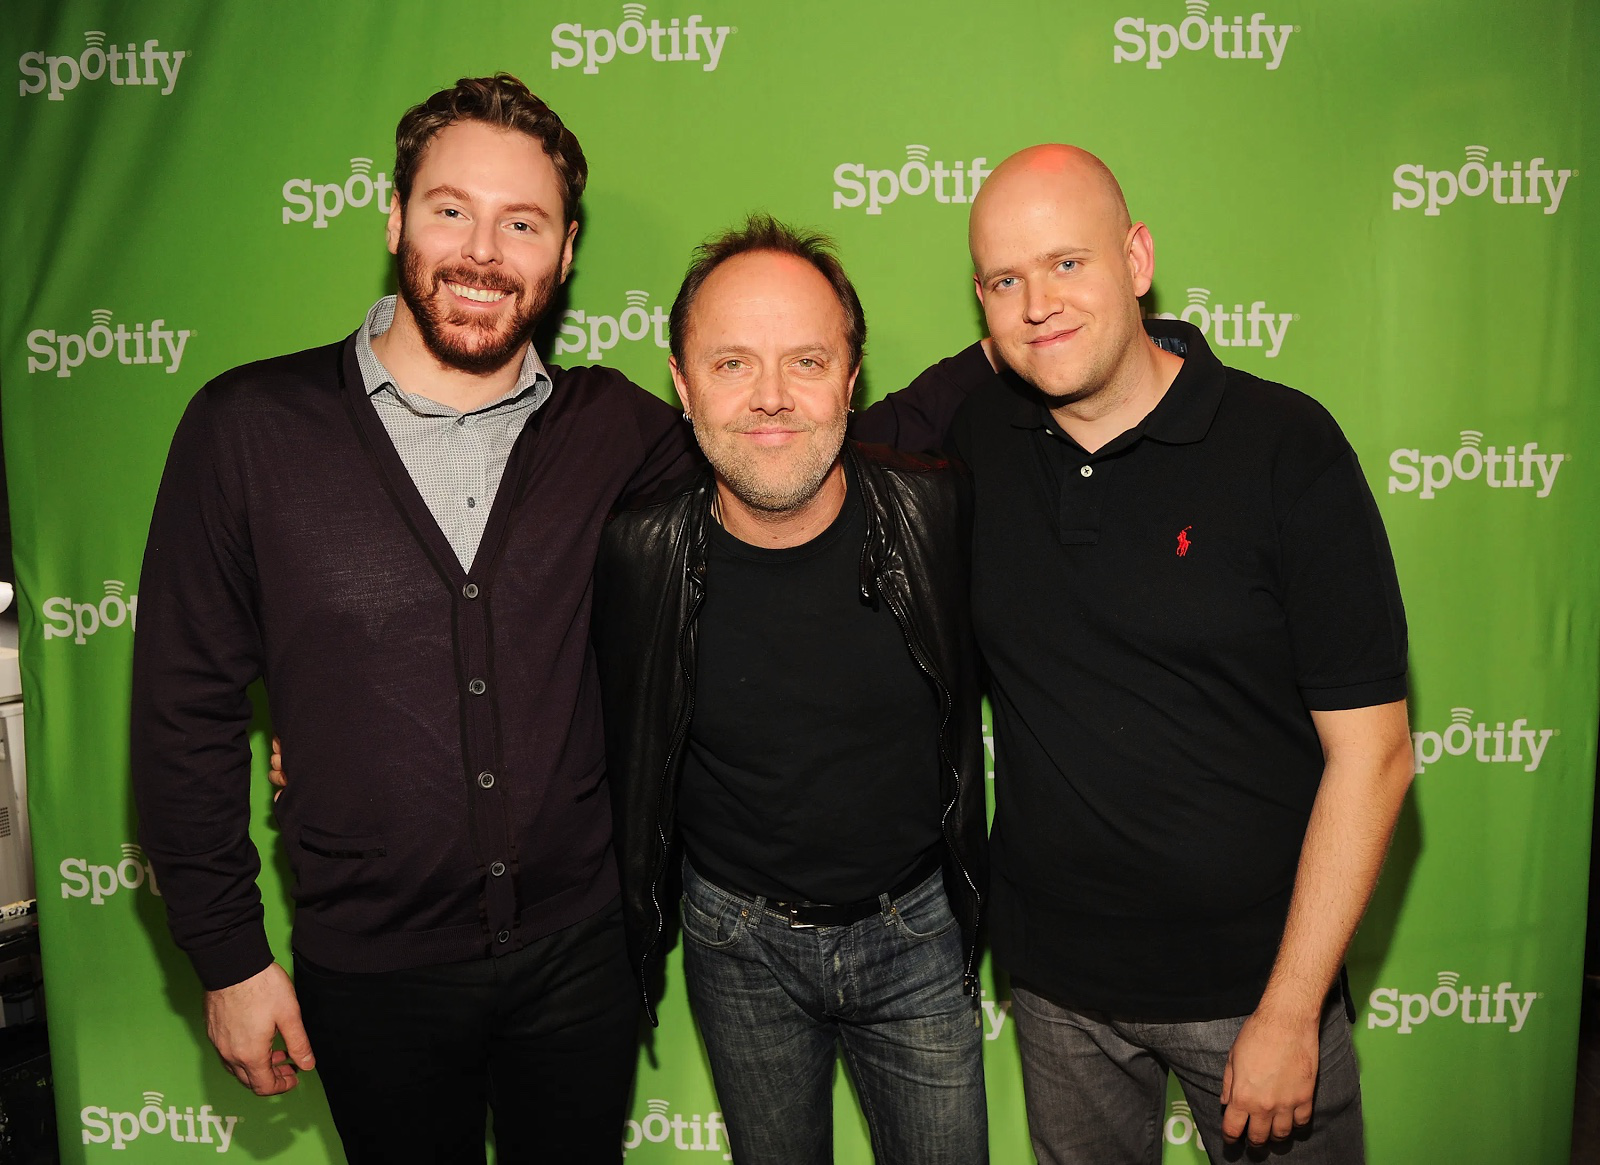 Sean Parker, Lars Ulrich, and Spotify CEO, Daniel Ek